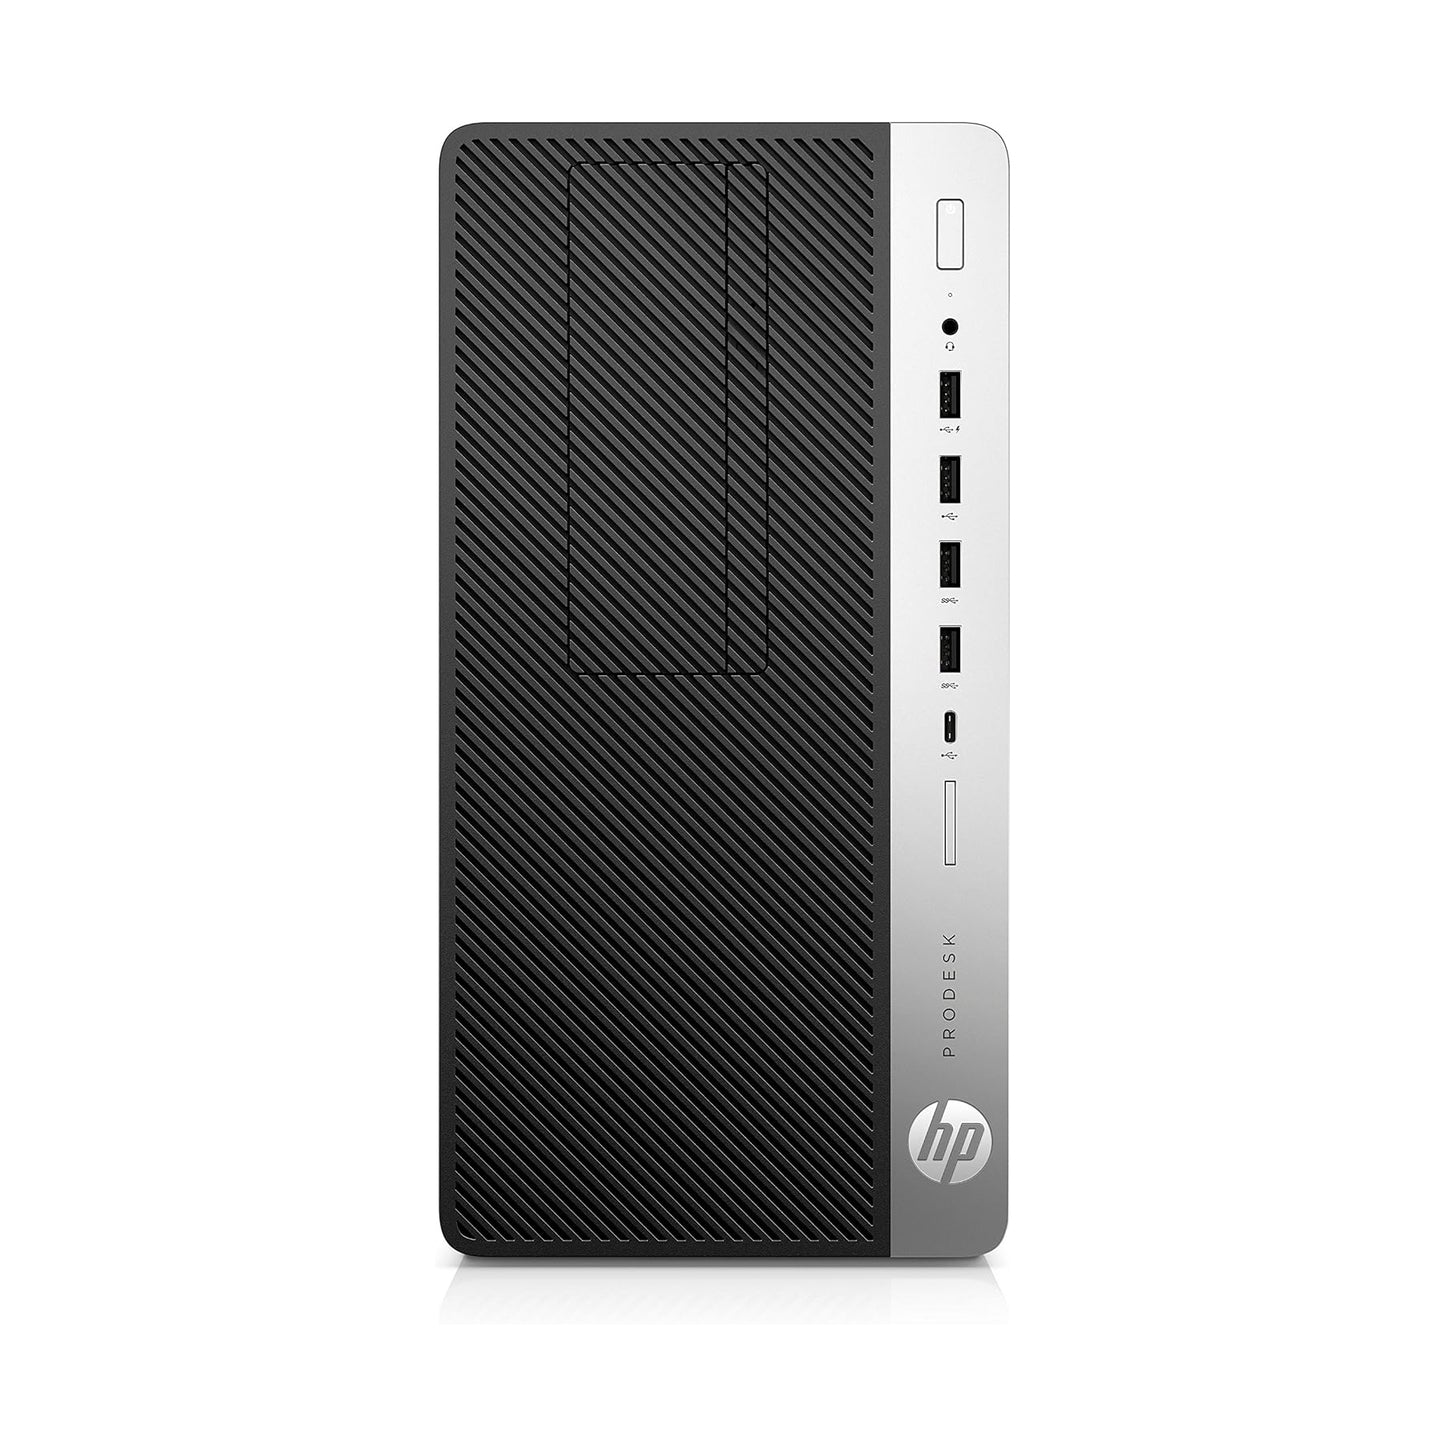 Hp Prodesk 600 Core i7-6700 Desktop Computer Offers (New OB)